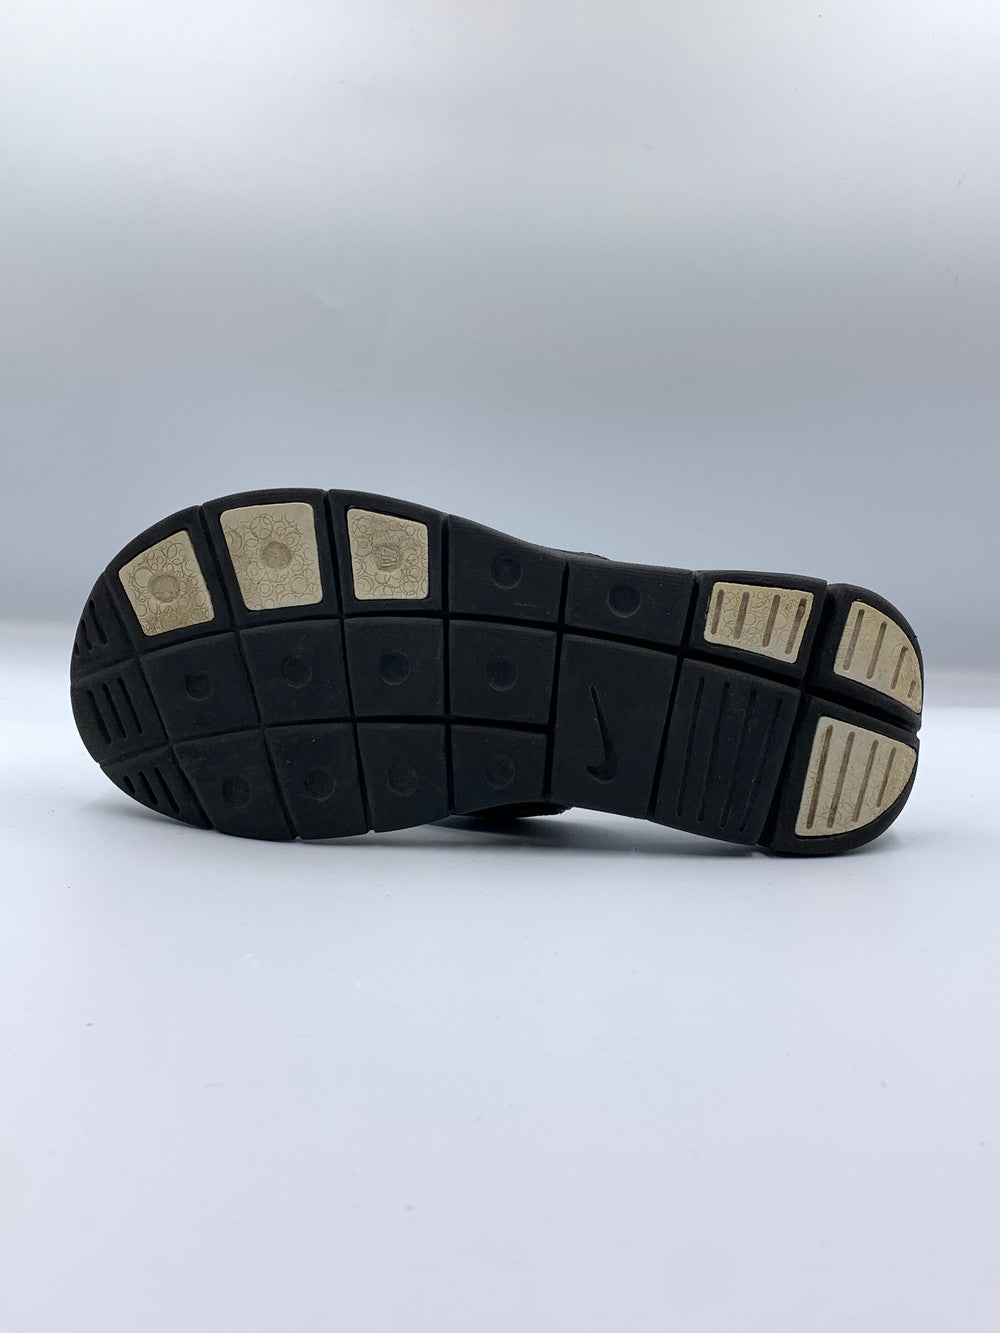 Nike Comfort Foot bed Original Brand For Women Slipper